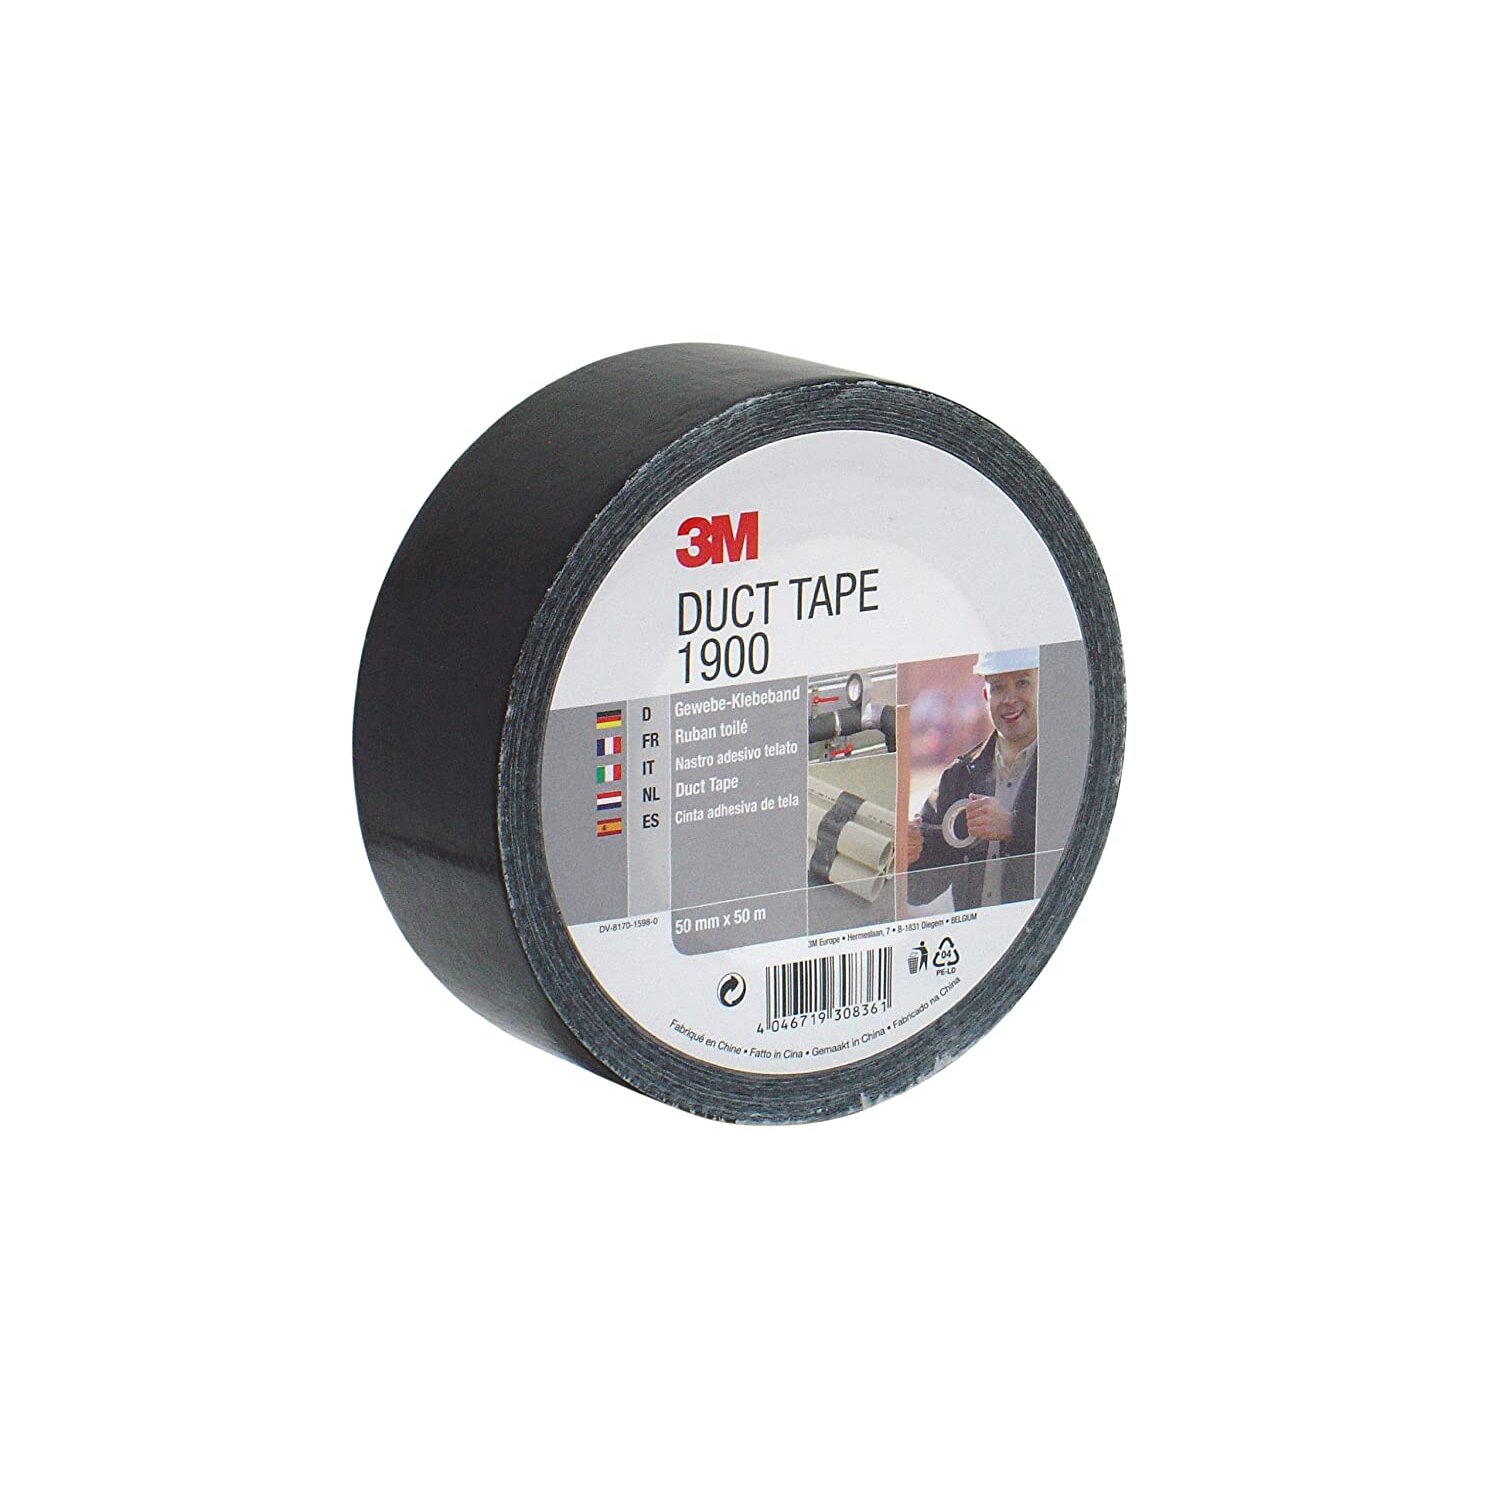 3M 1900S50 Value Duct Tape, 50 mm x 50 m, Black